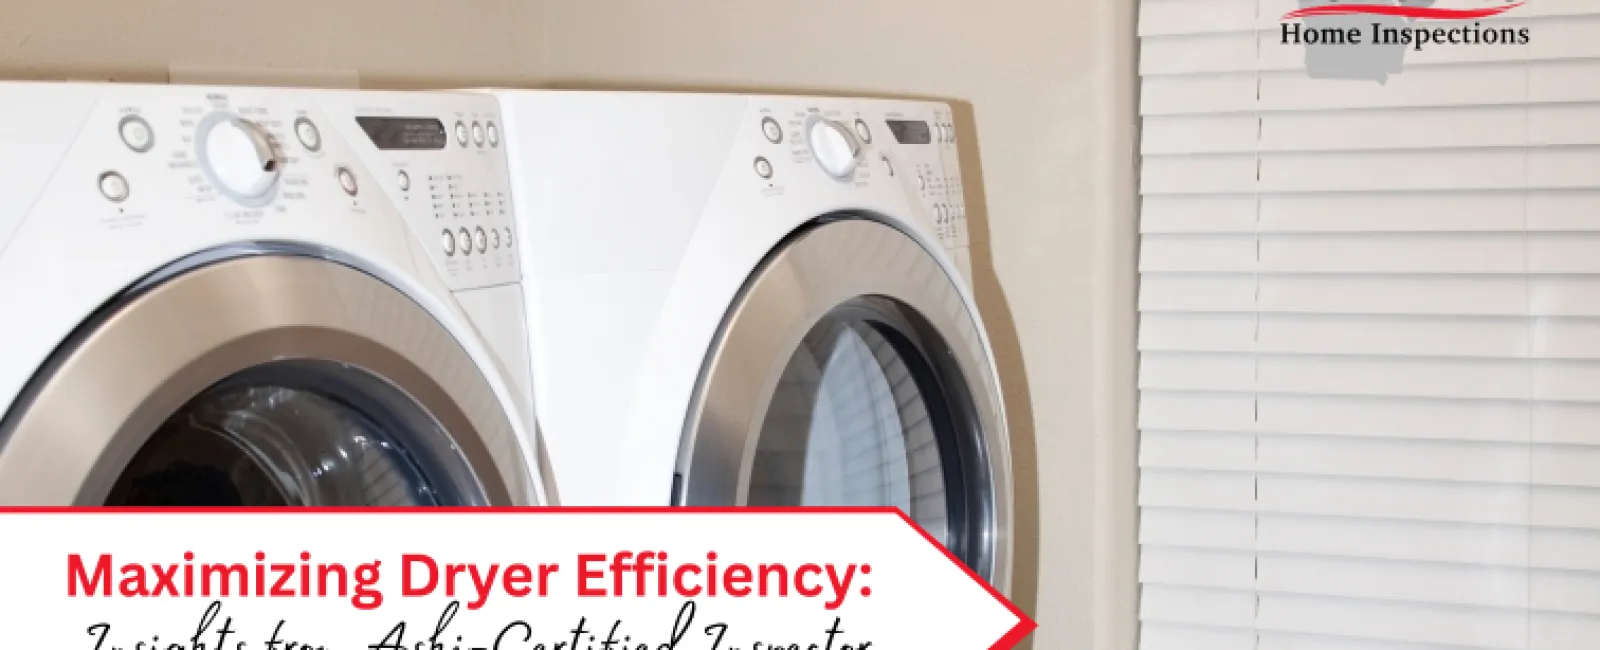 Maximizing Dryer Efficiency 9